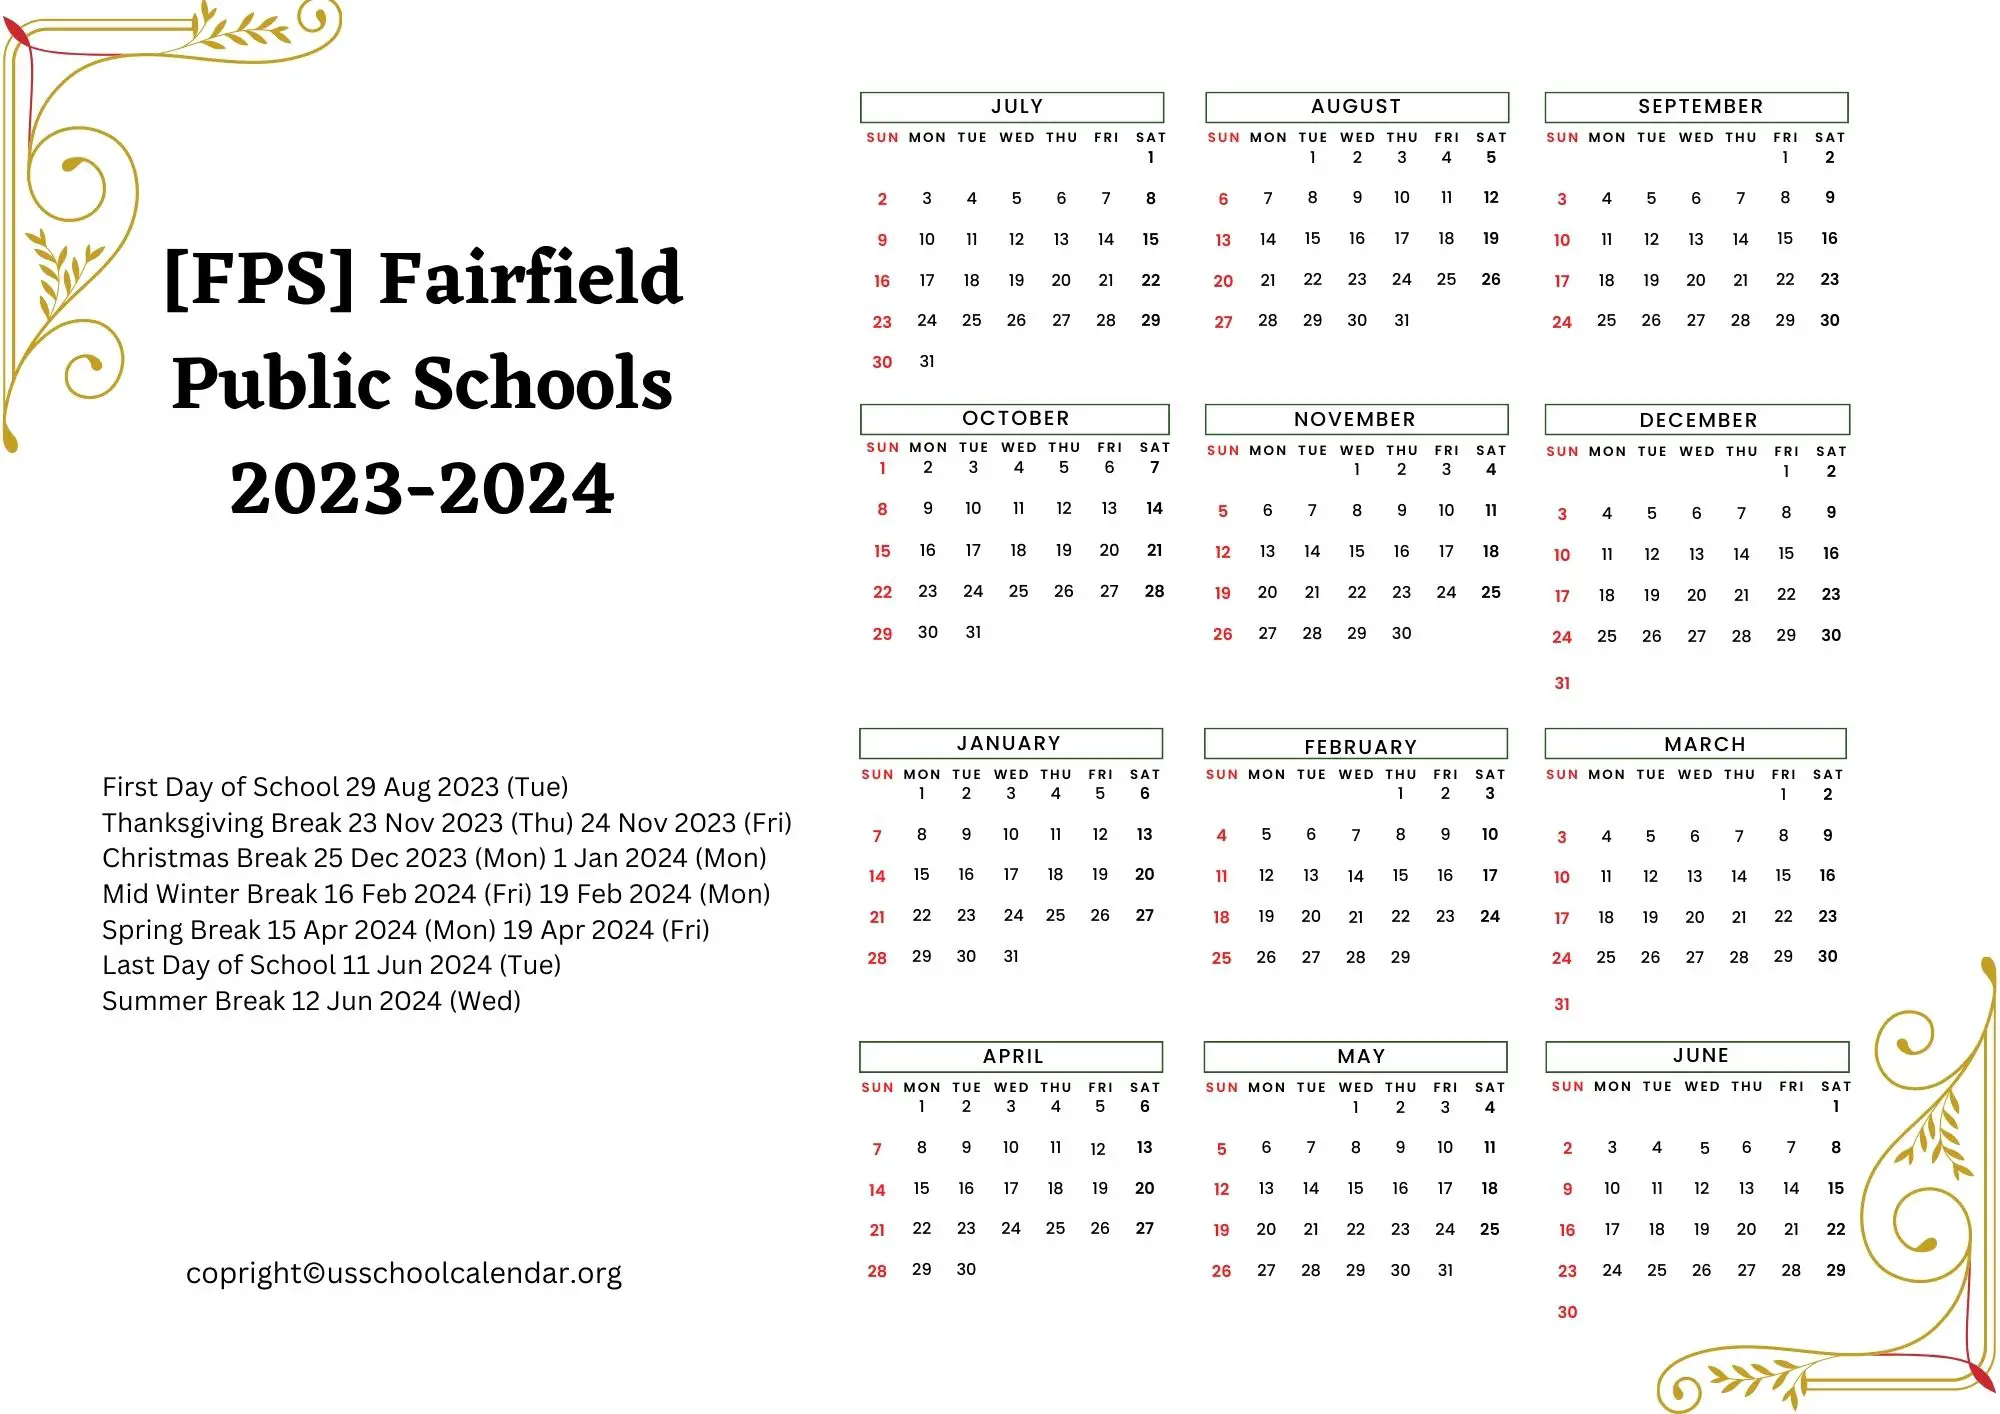 FPS Fairfield Public Schools Calendar with Holidays 2023 2024